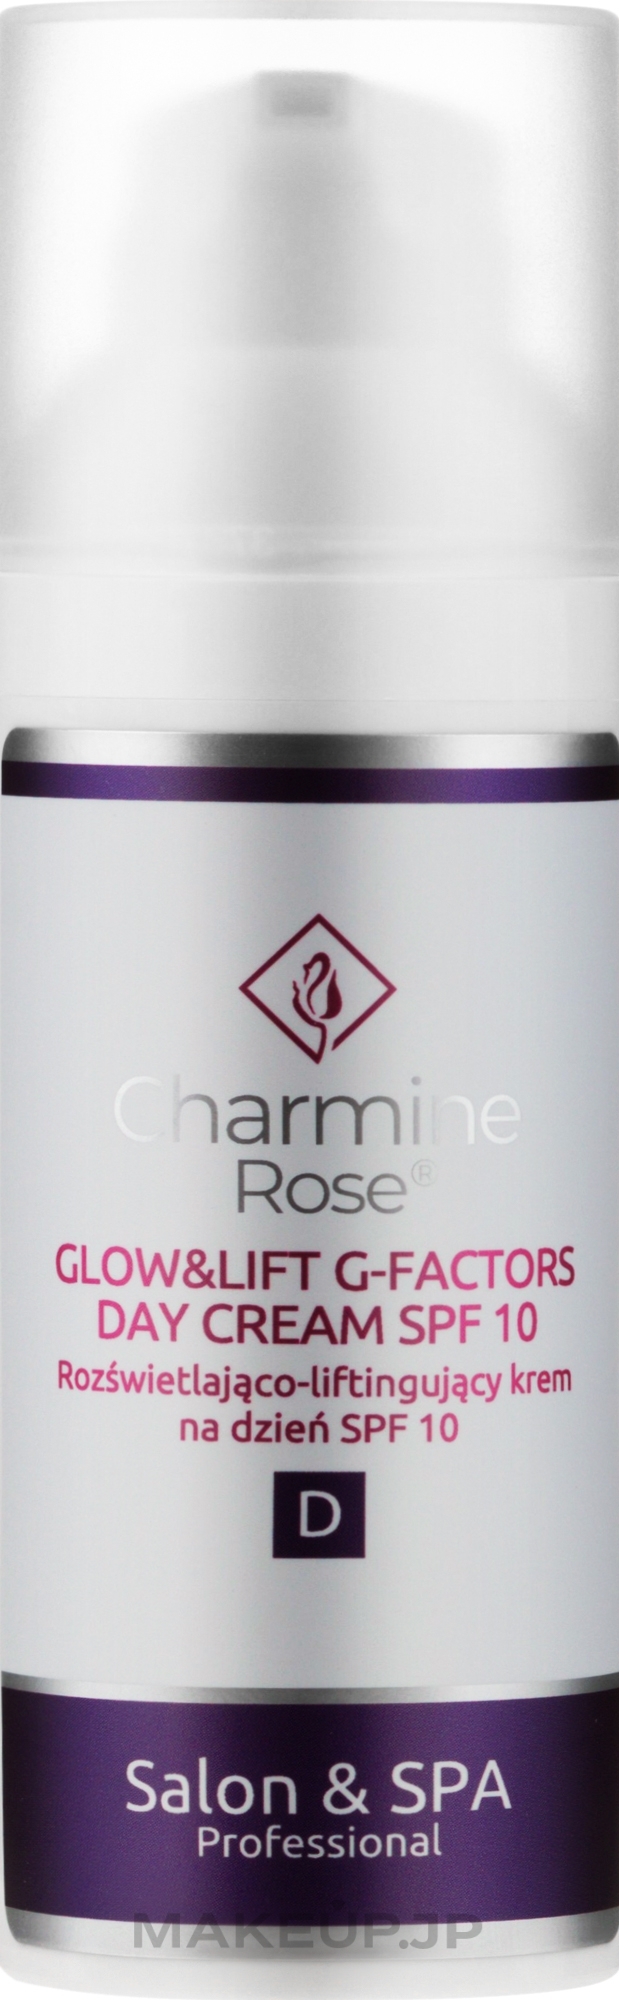 Facial Day Cream - Charmine Rose Glow&Lift G-Factors Day Cream SPF10 — photo 50 ml